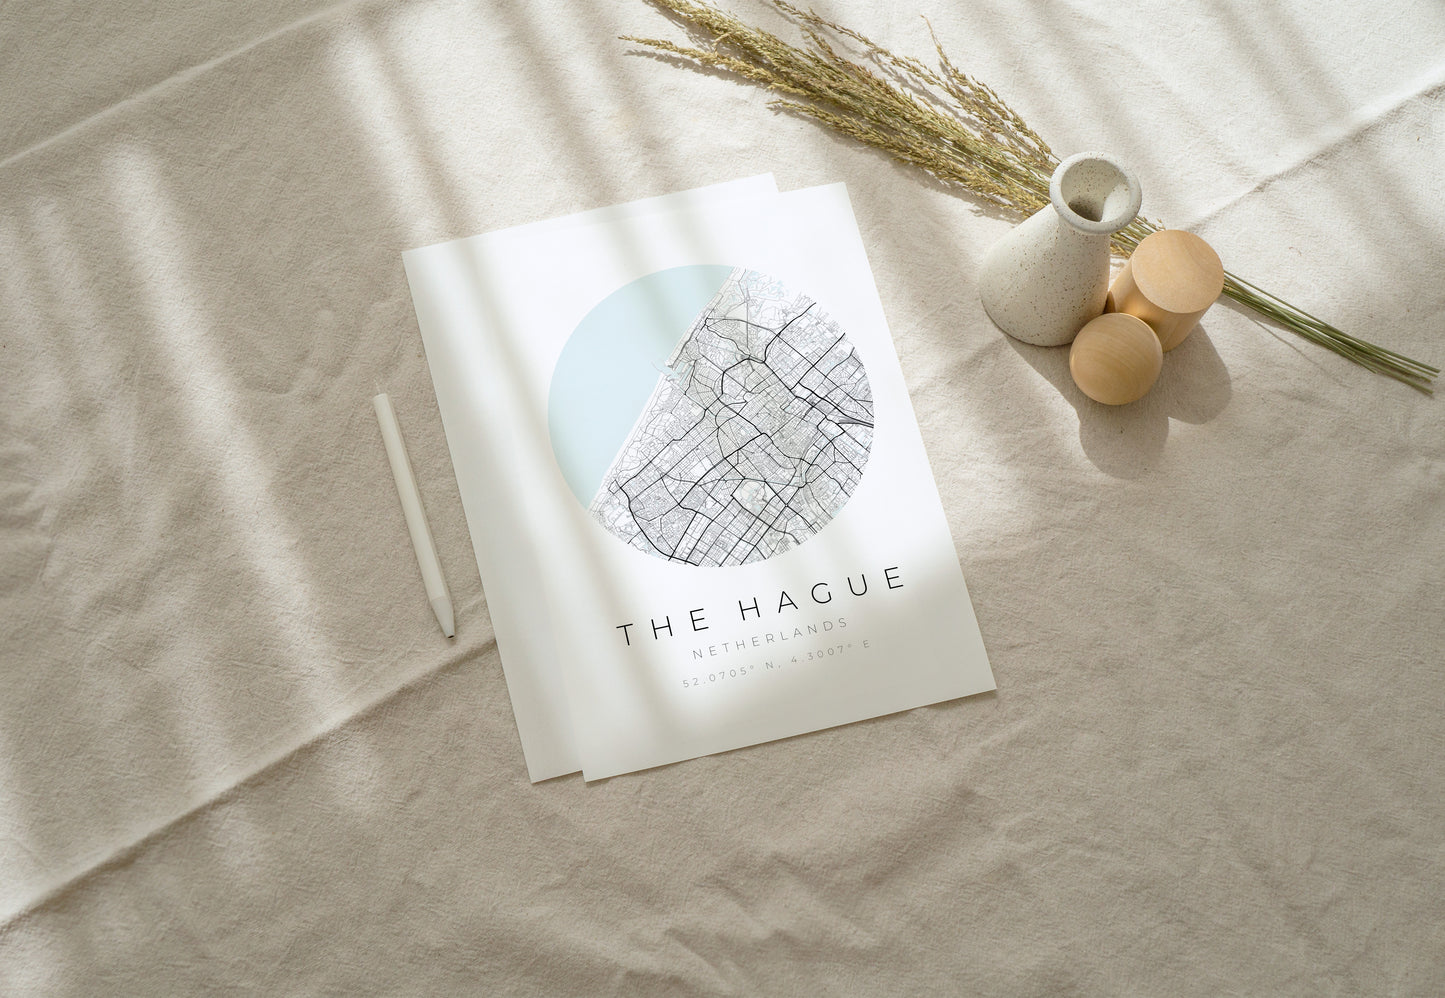 Den Haag Poster | Karte kreisförmig